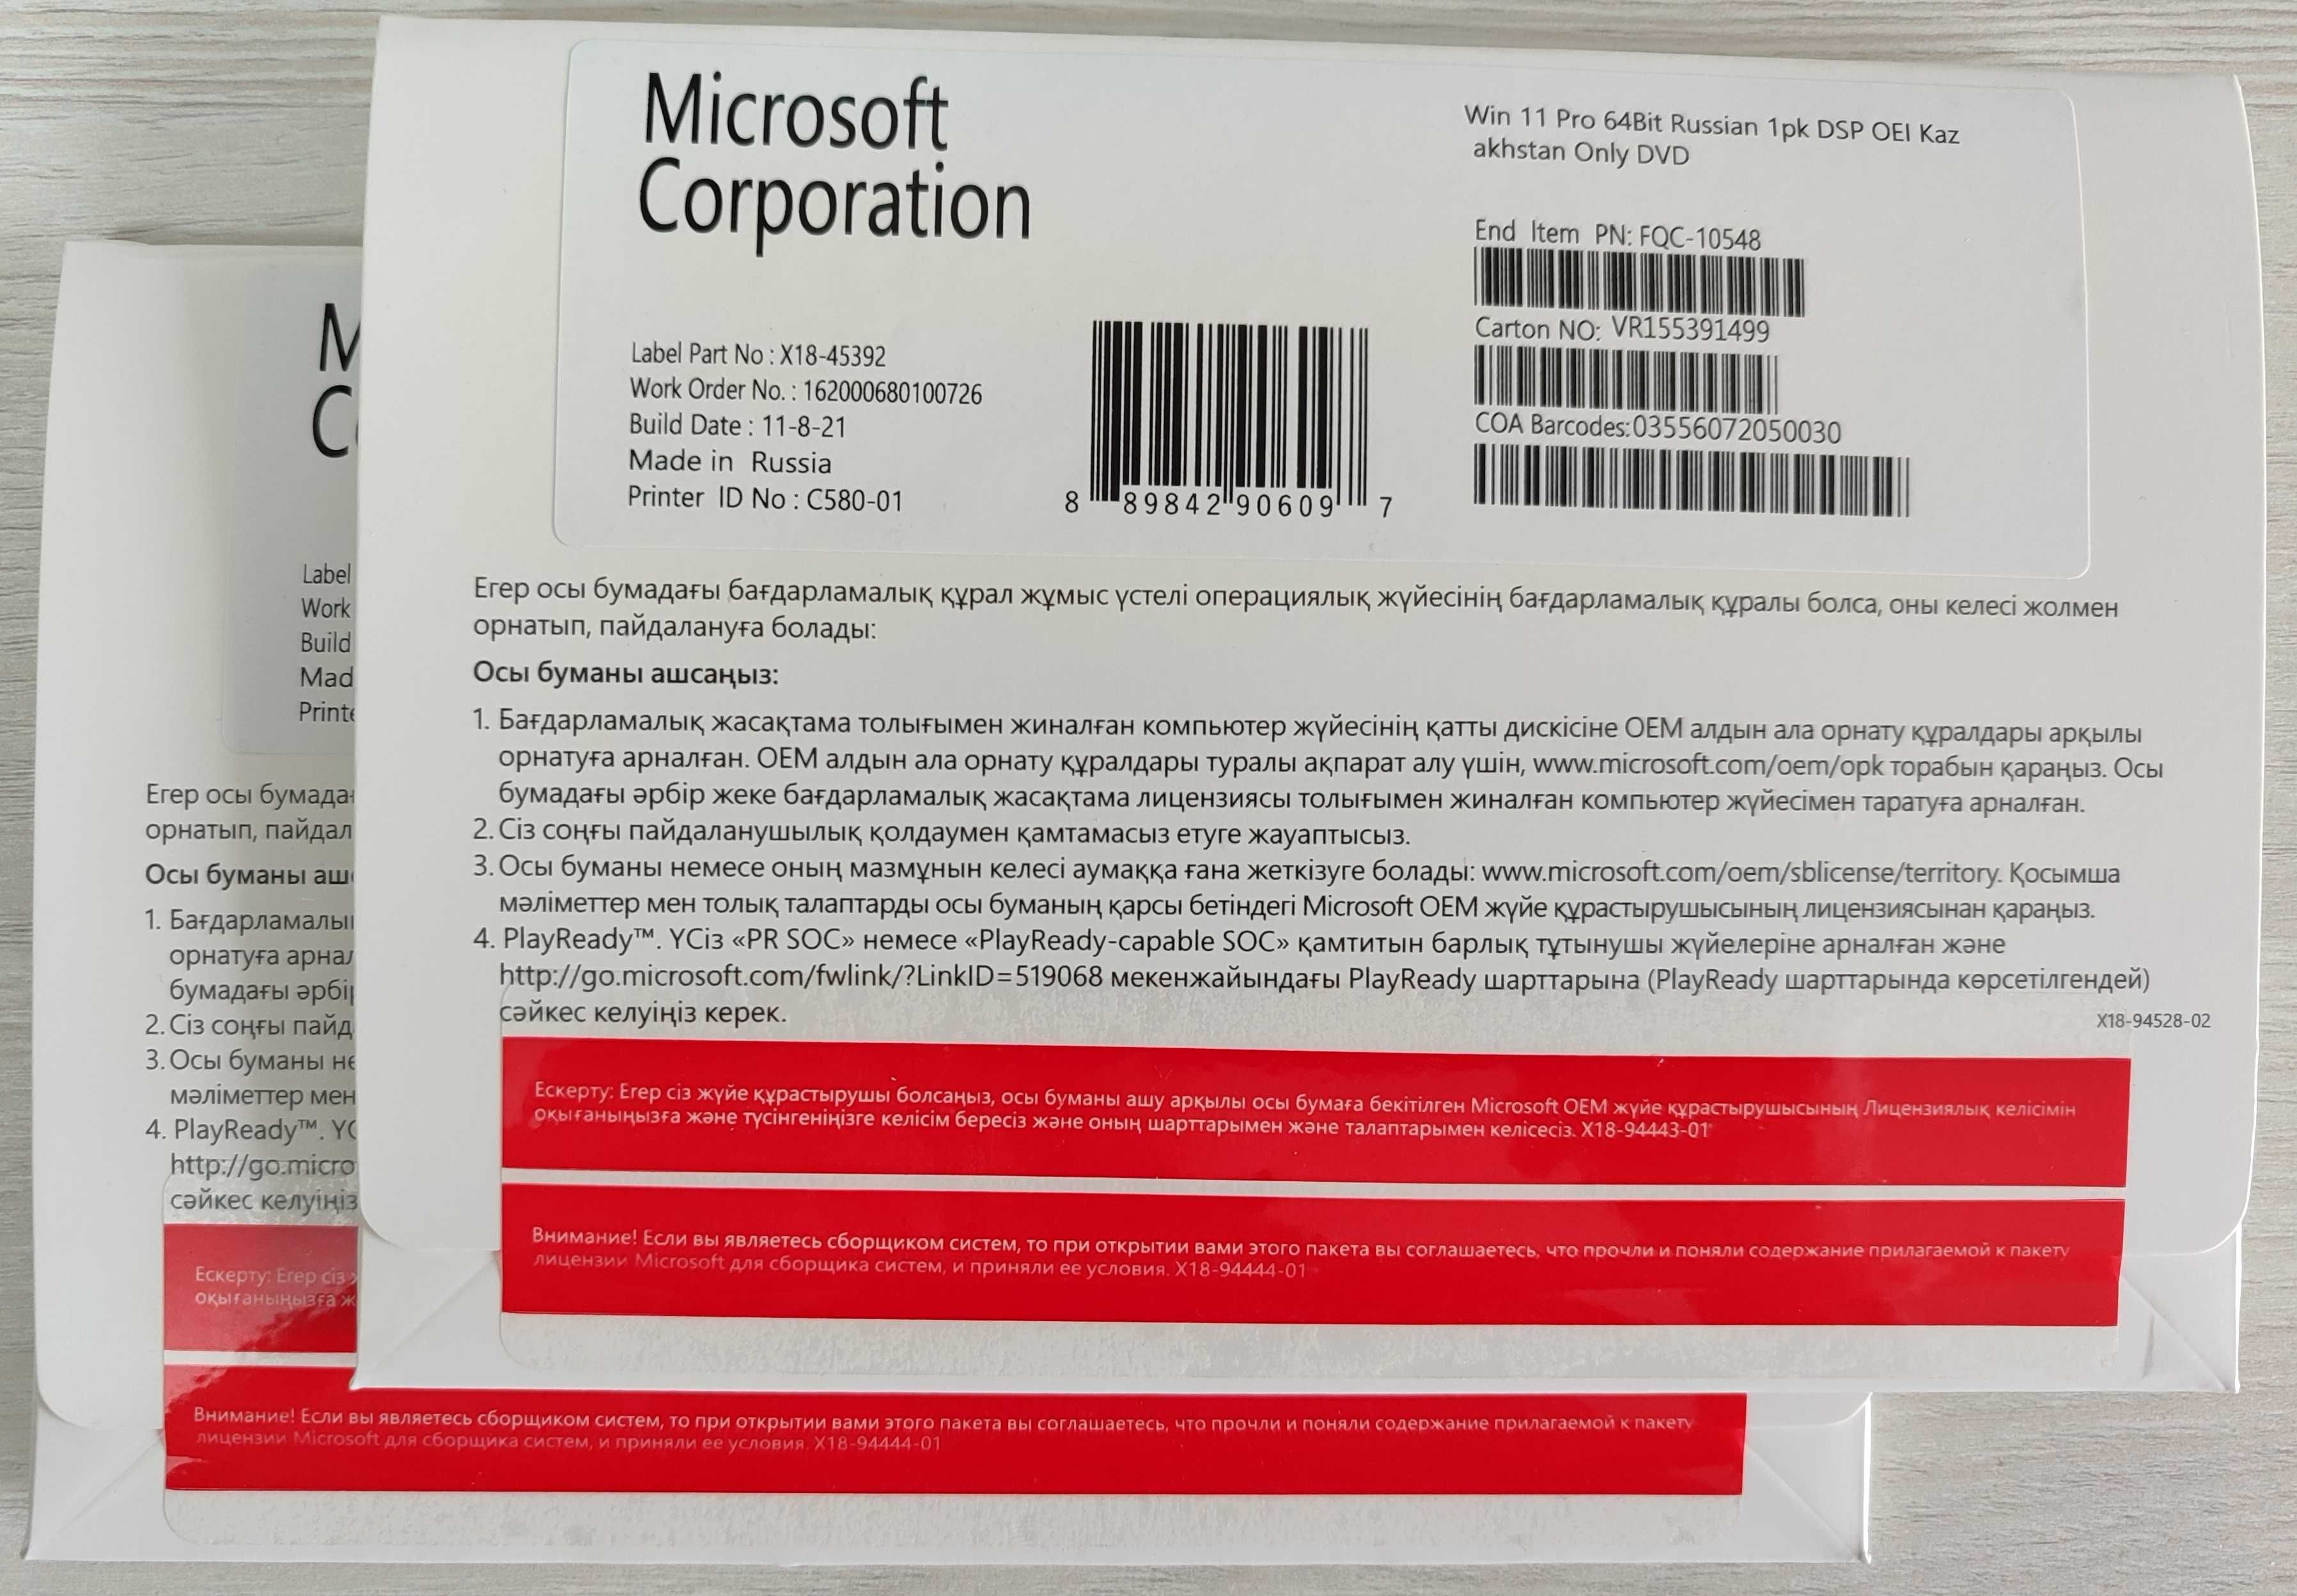 Windows 11 Pro OEM only Kazakhstan для Казахстана Конверт с диском